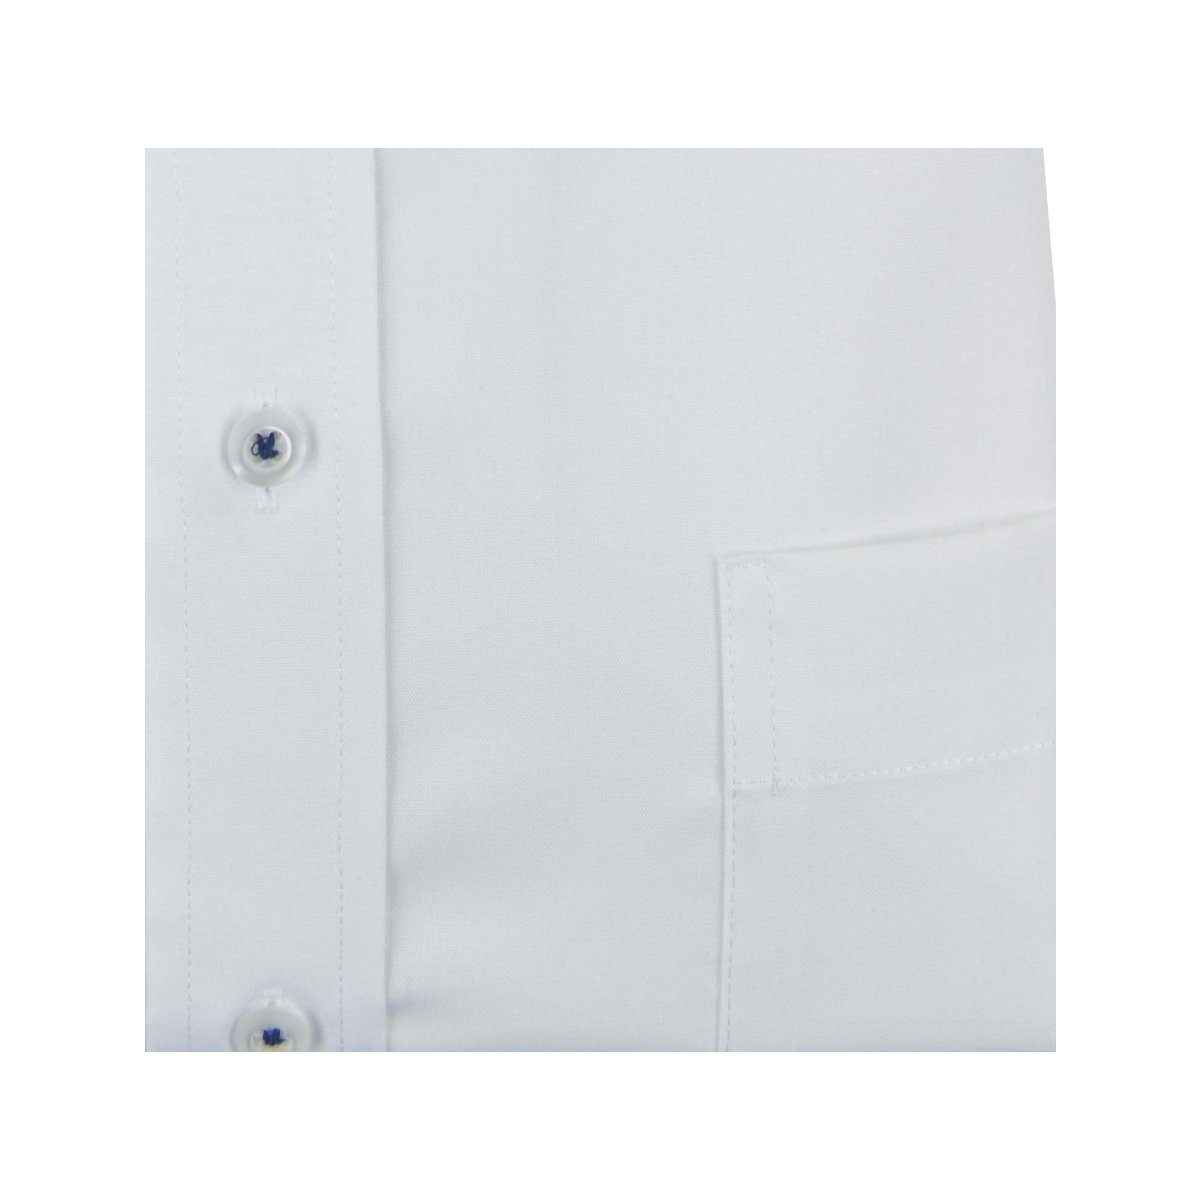 Eterna (1-tlg) Langarmhemd weiß